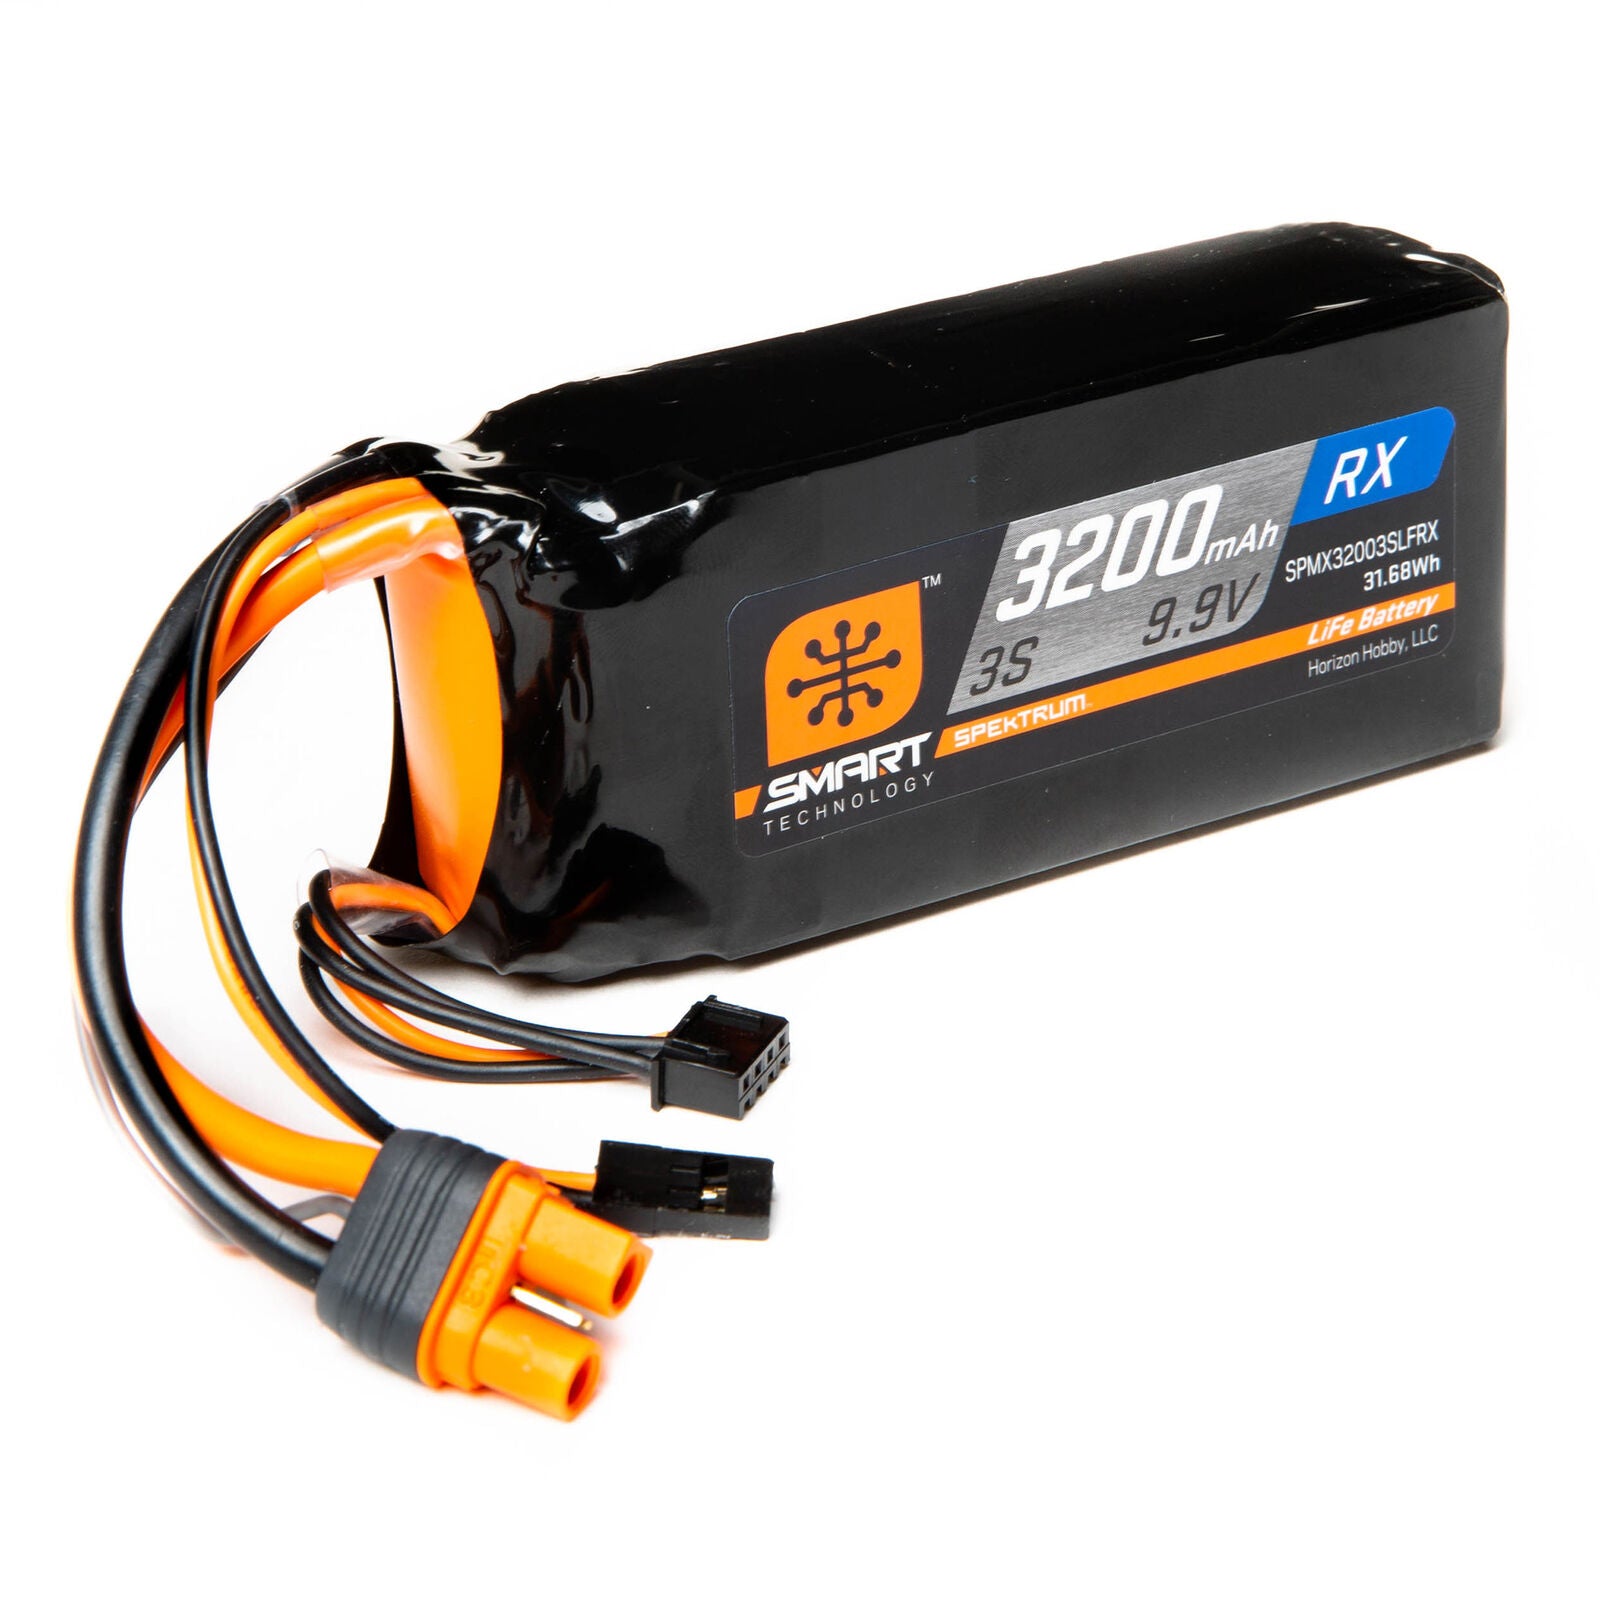 Spektrum 9.9V 3200mAh 3S 15C Smart LiFe ECU Battery: Universal Receiver, IC3 *CLEARANCE